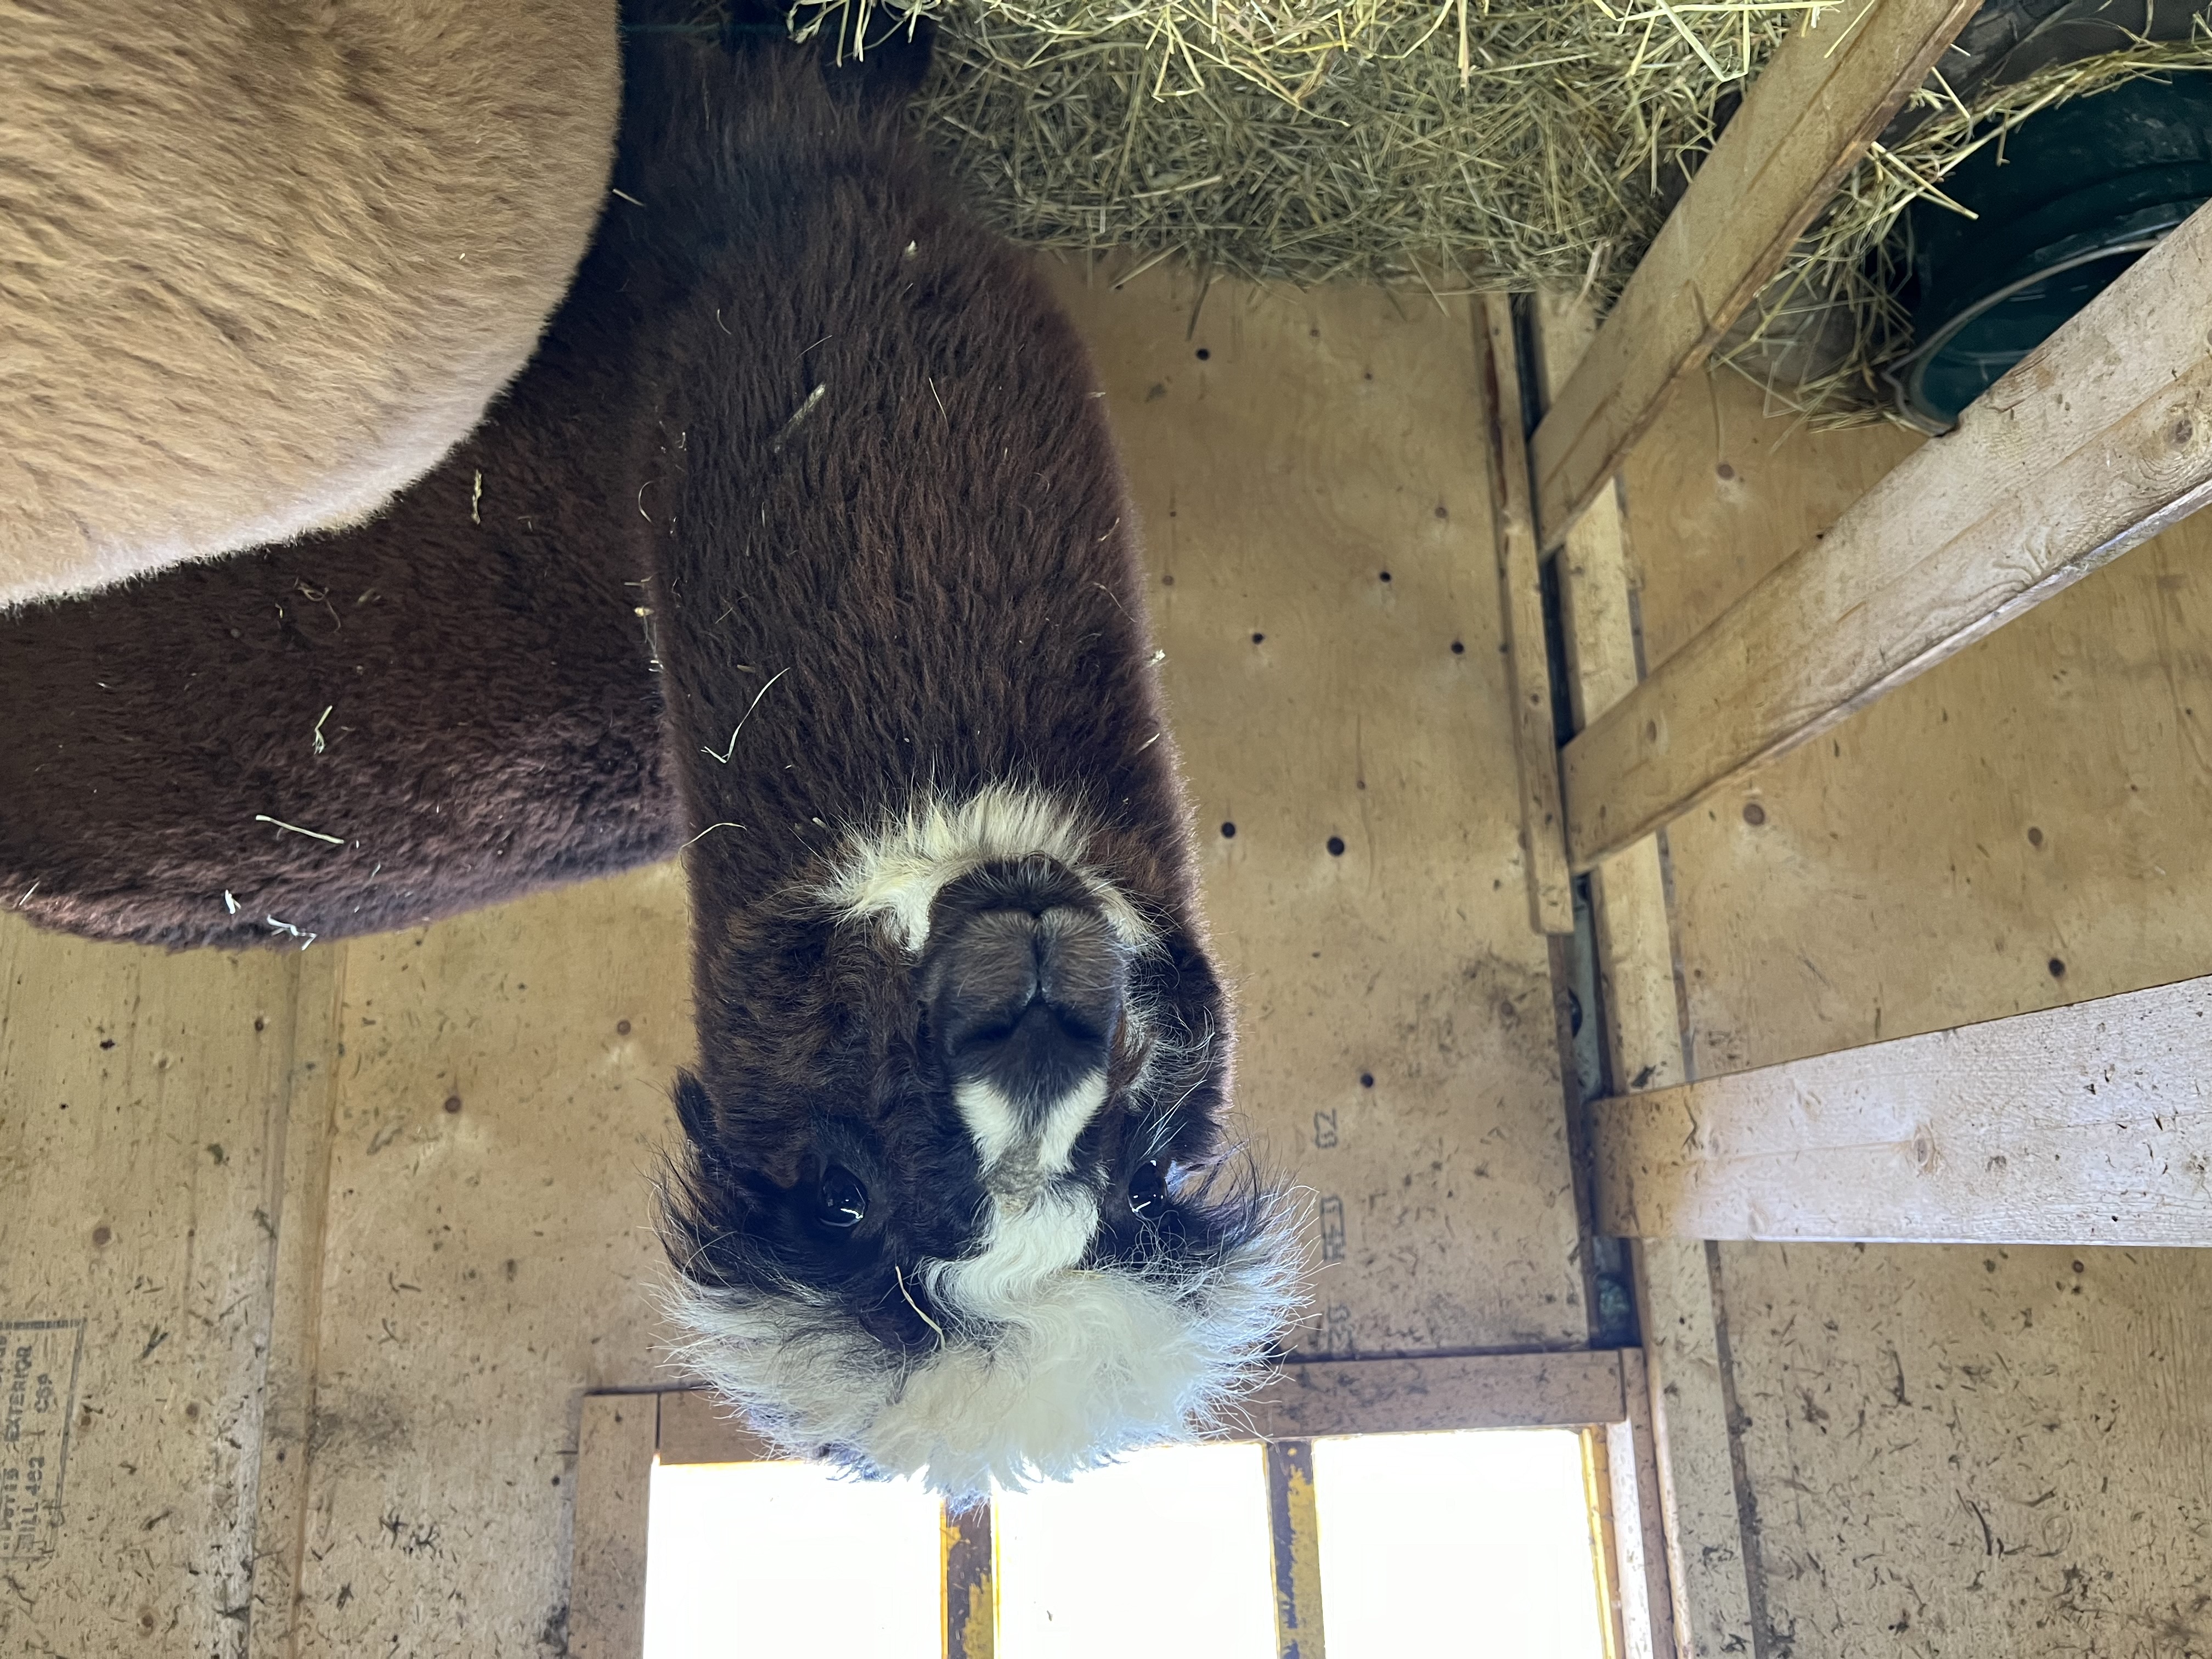 Brown alpaca in barn staring at camera